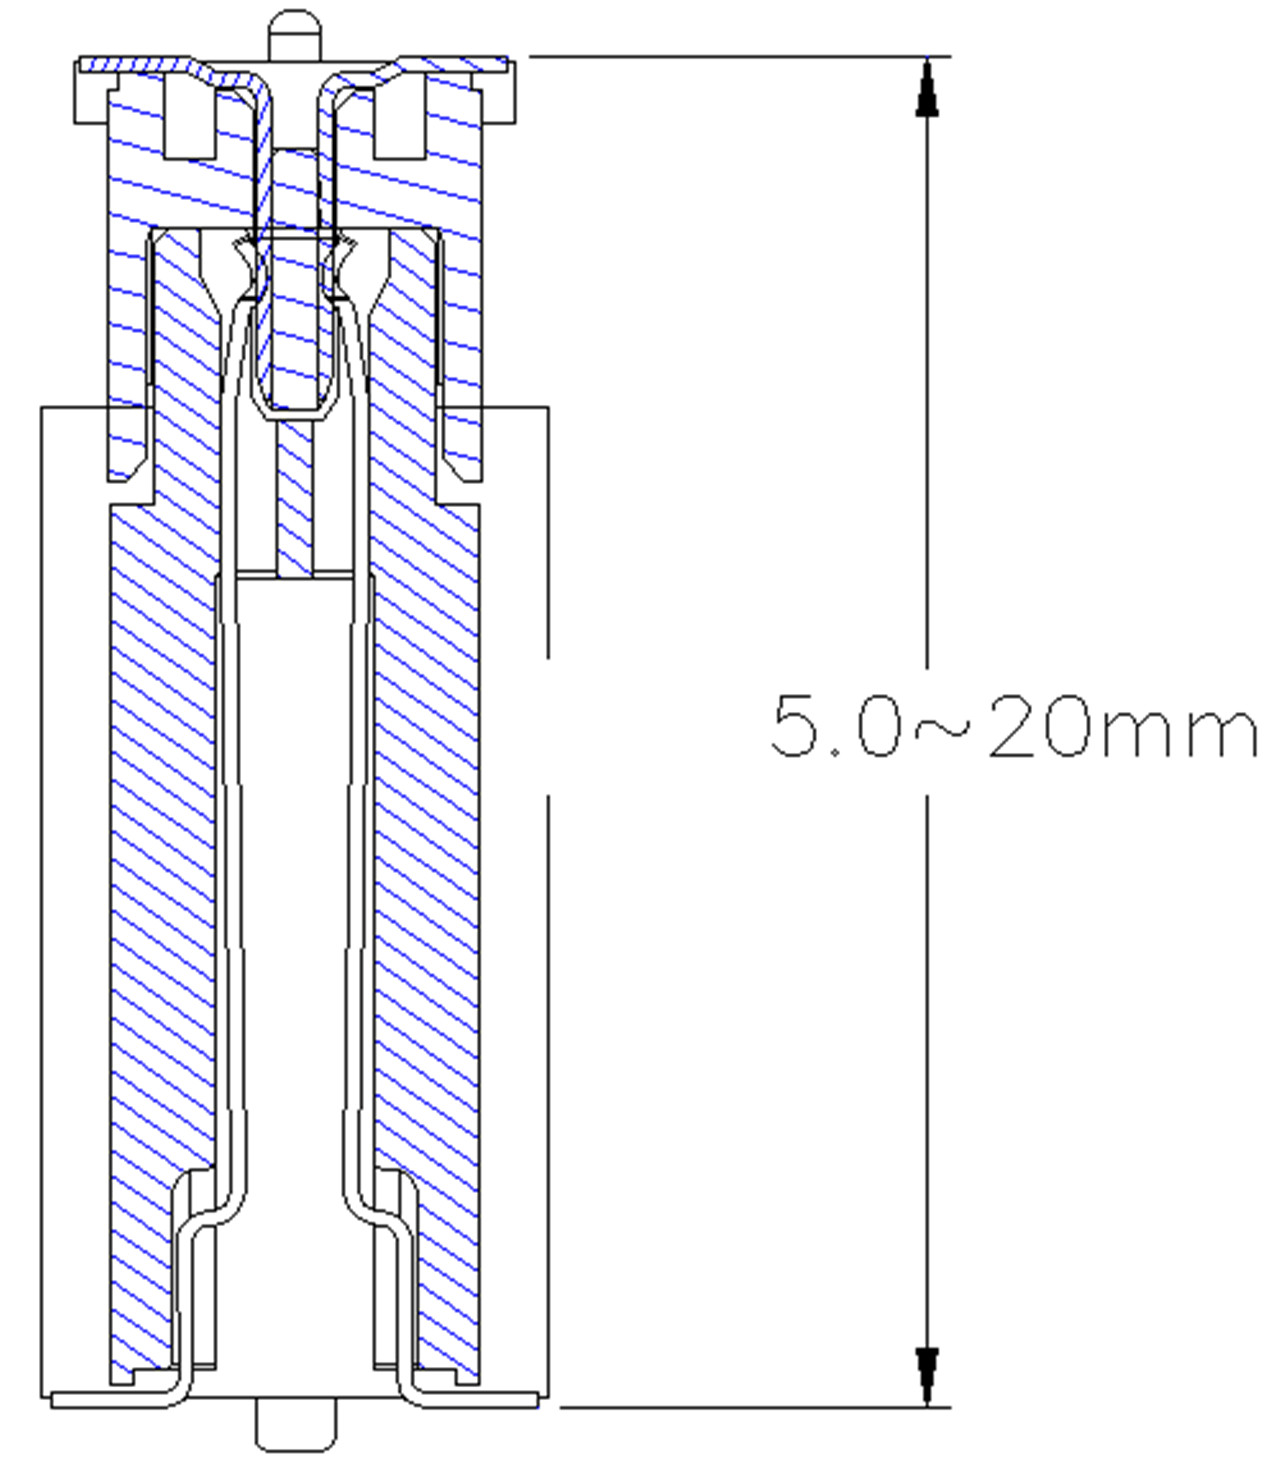 Conector placa a placa de 0,8 mm - 7,7 mm de altura macho (6)